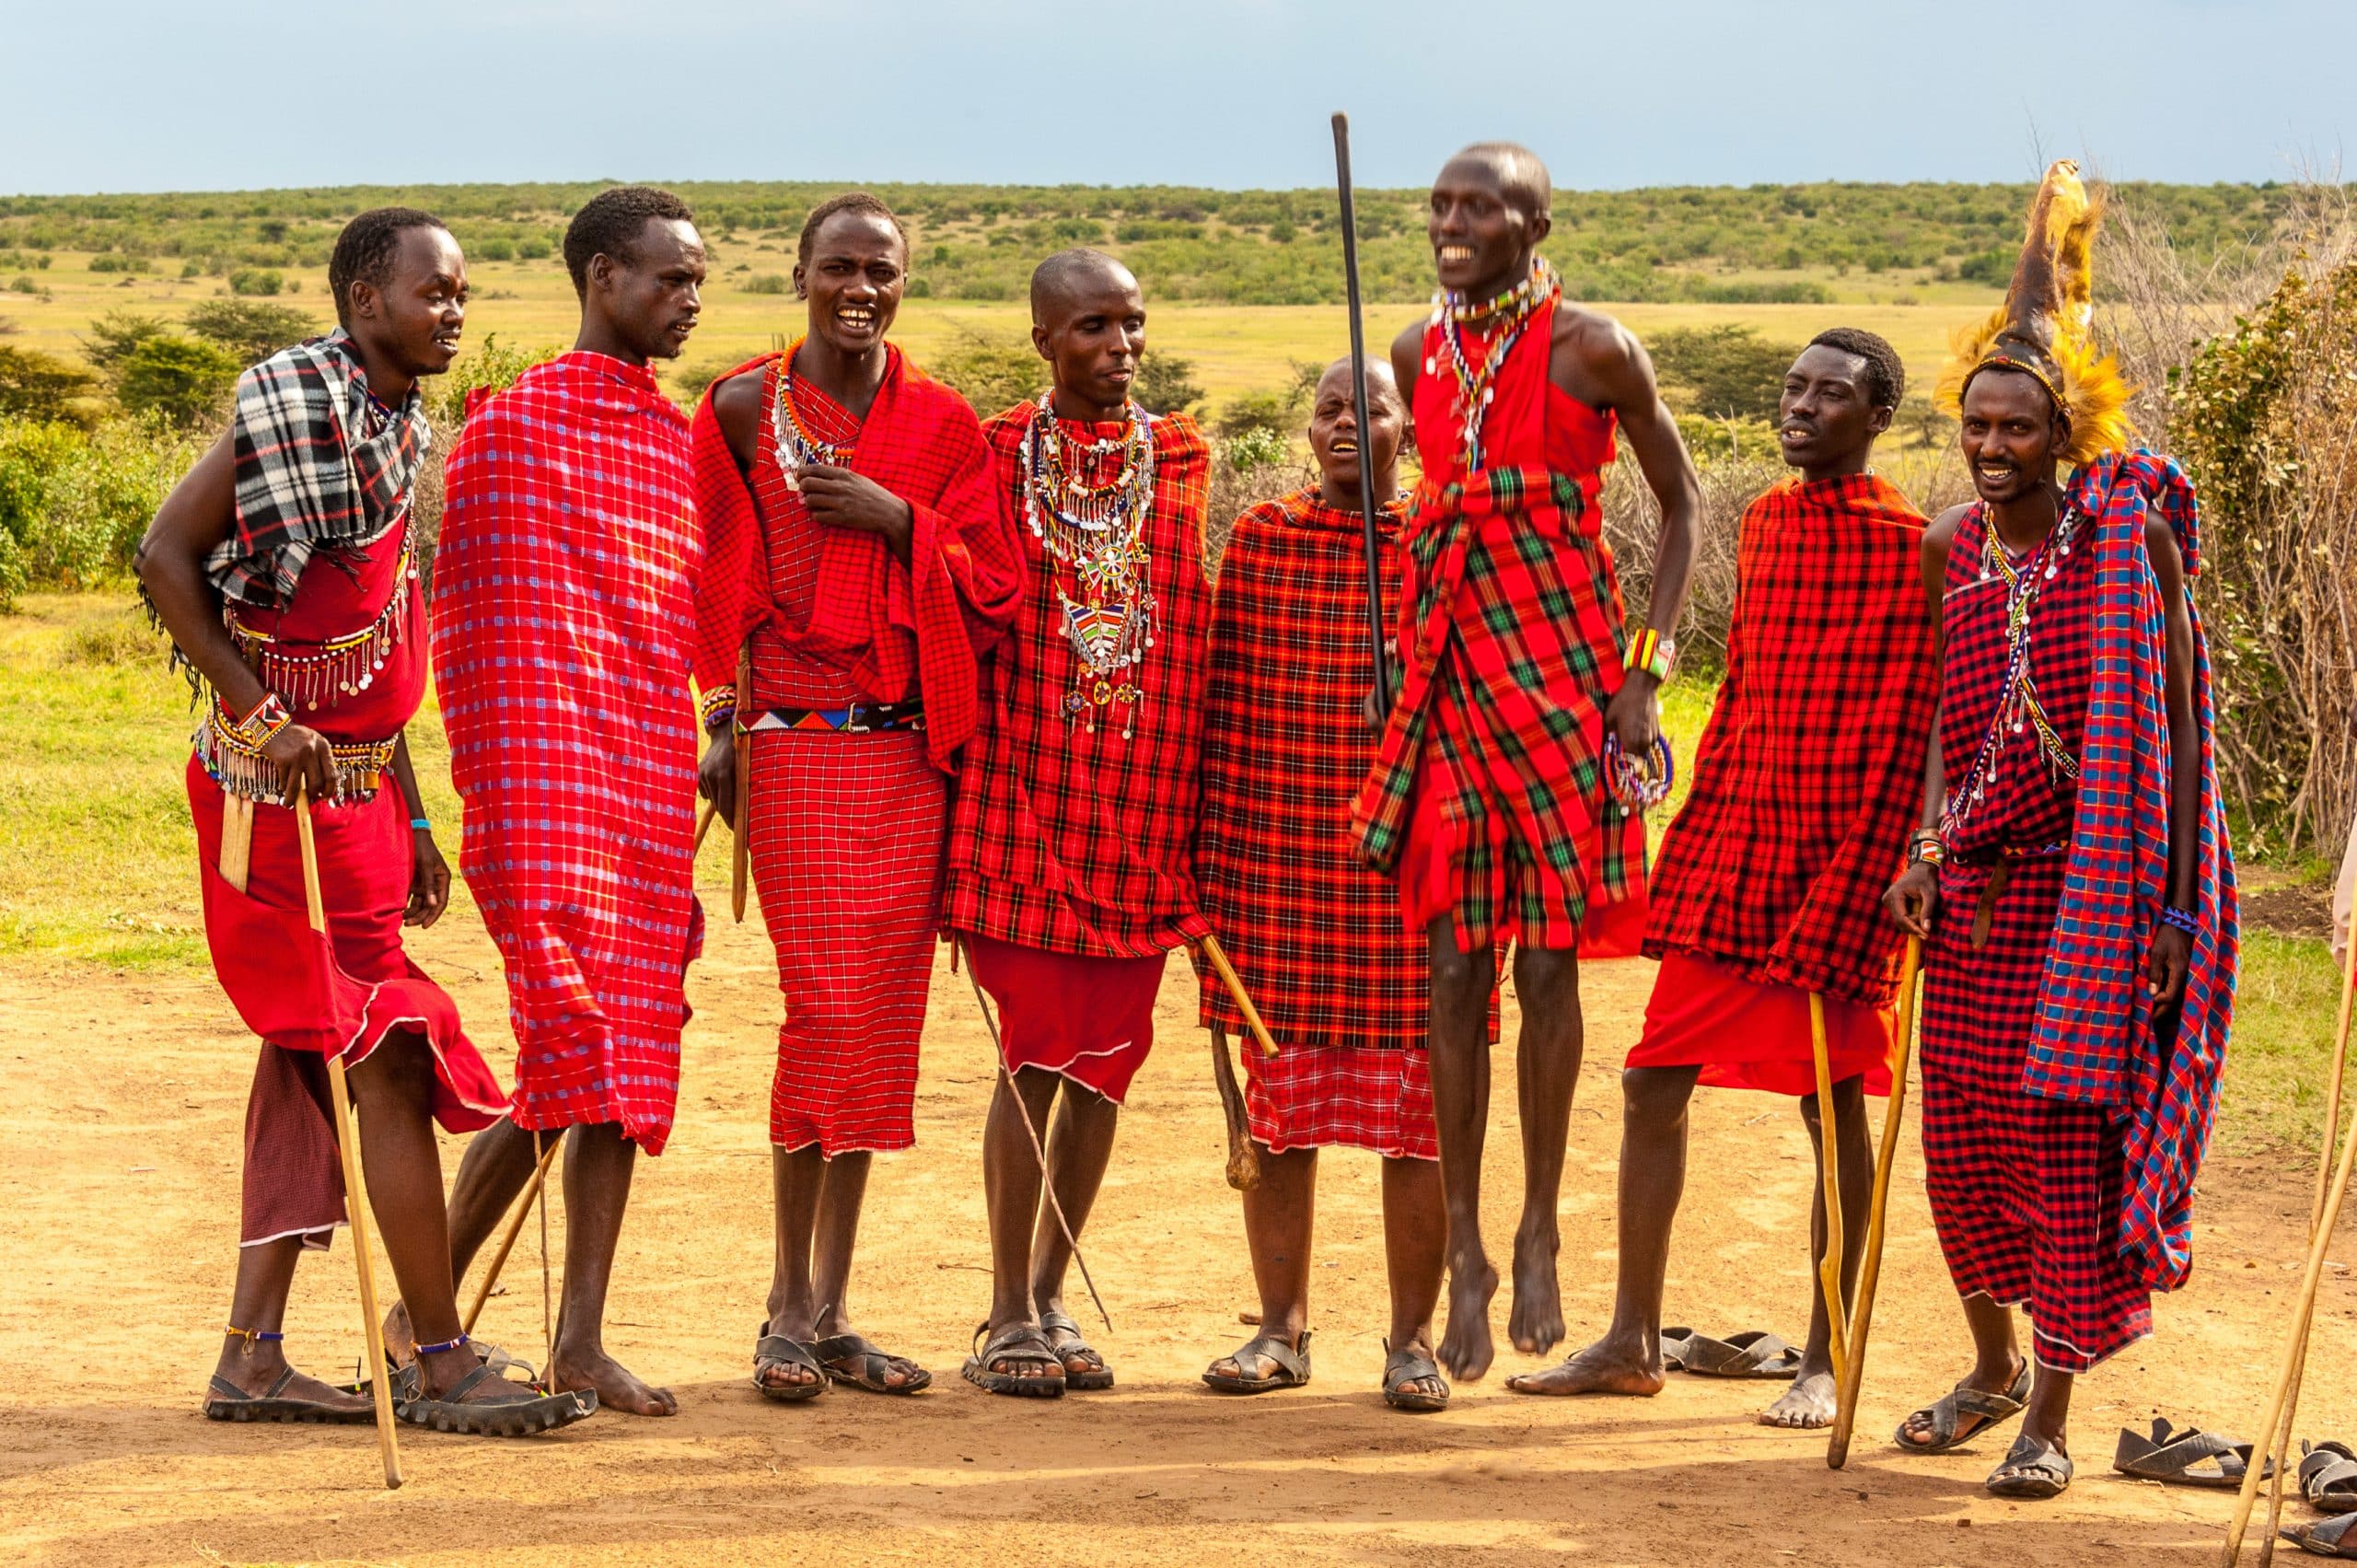 The Maasai Culture